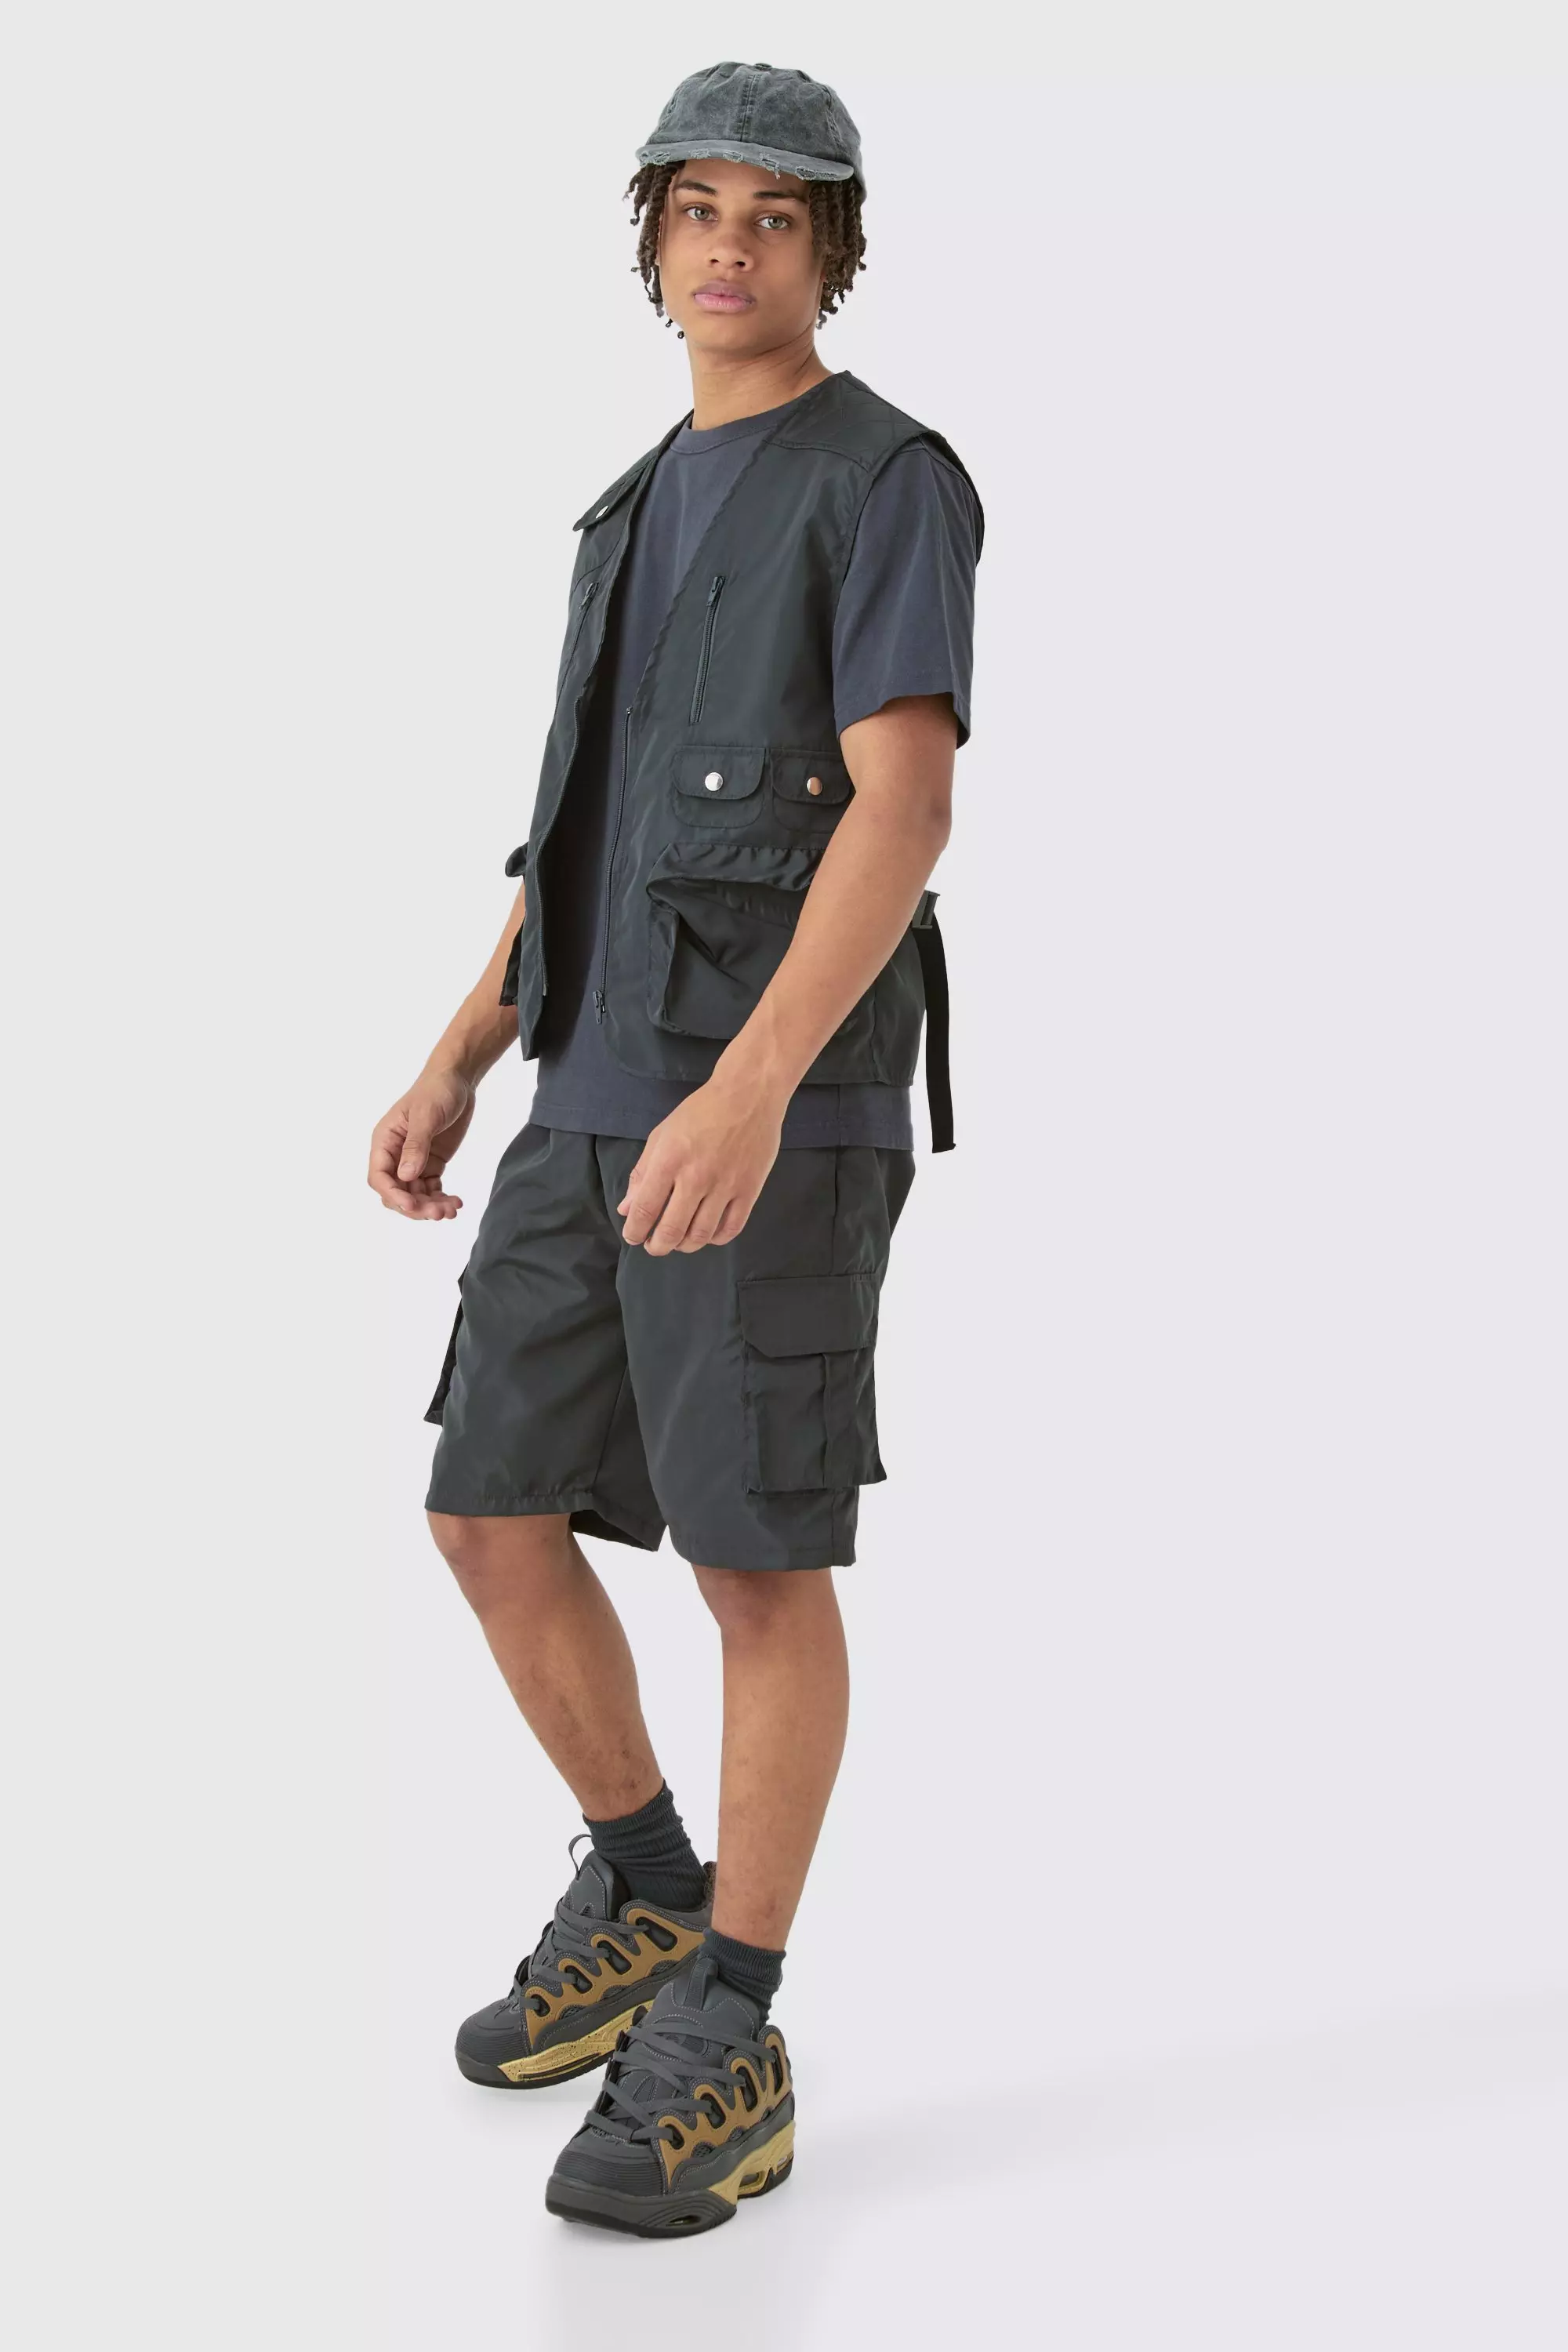 Charcoal Grey Nylon Utility Vest & Short Set